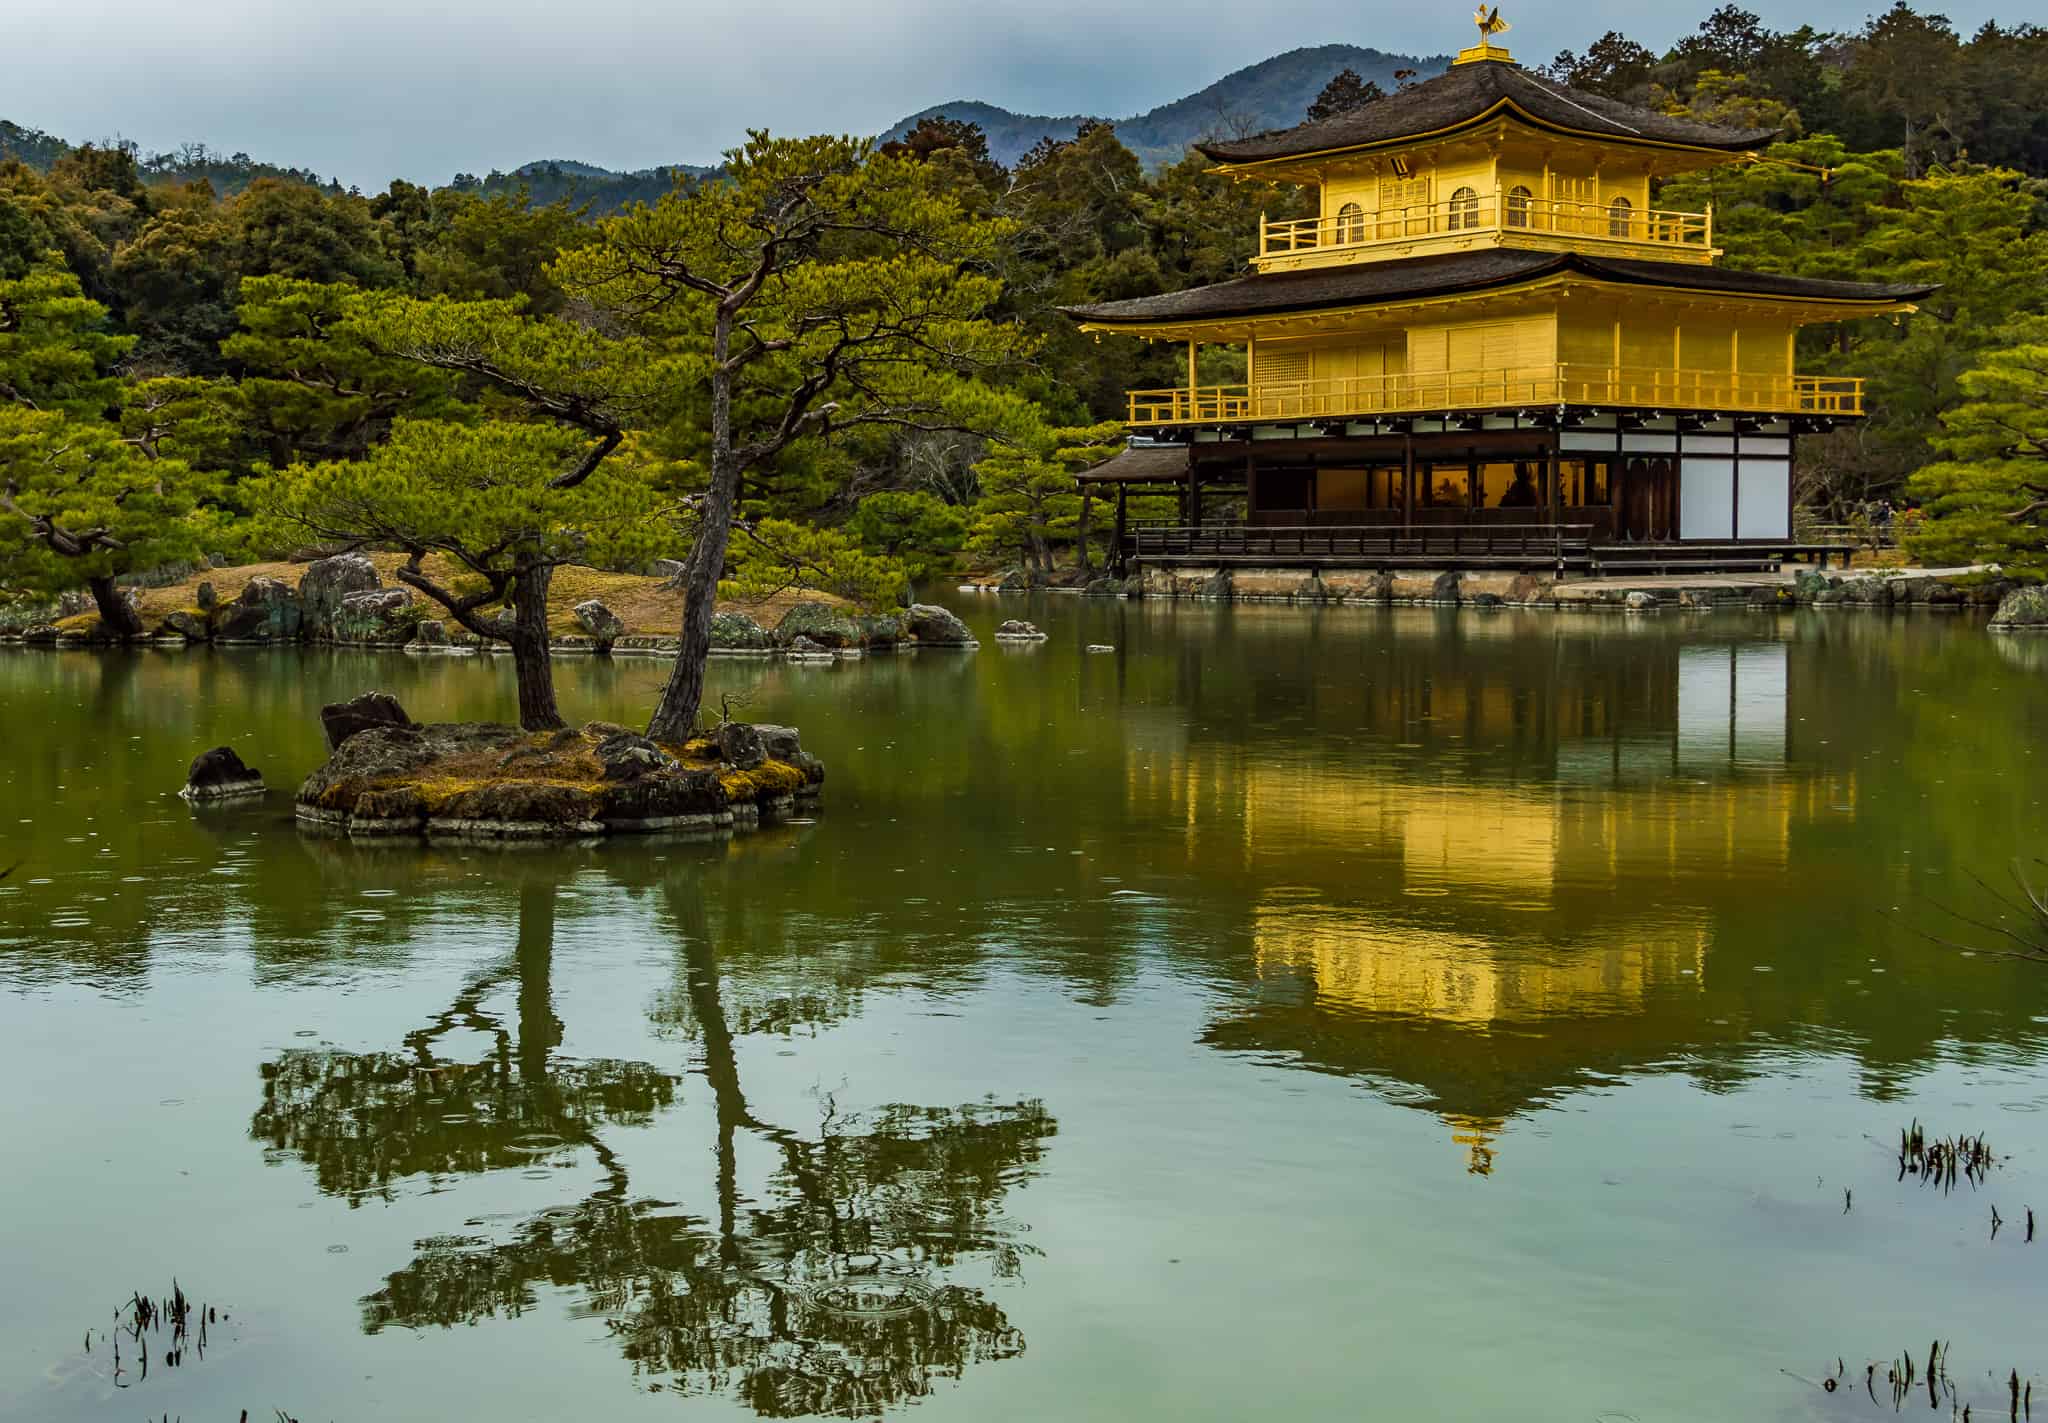 Viewing thegolden Kinkaku-ji Temple, Kyoto, Japan